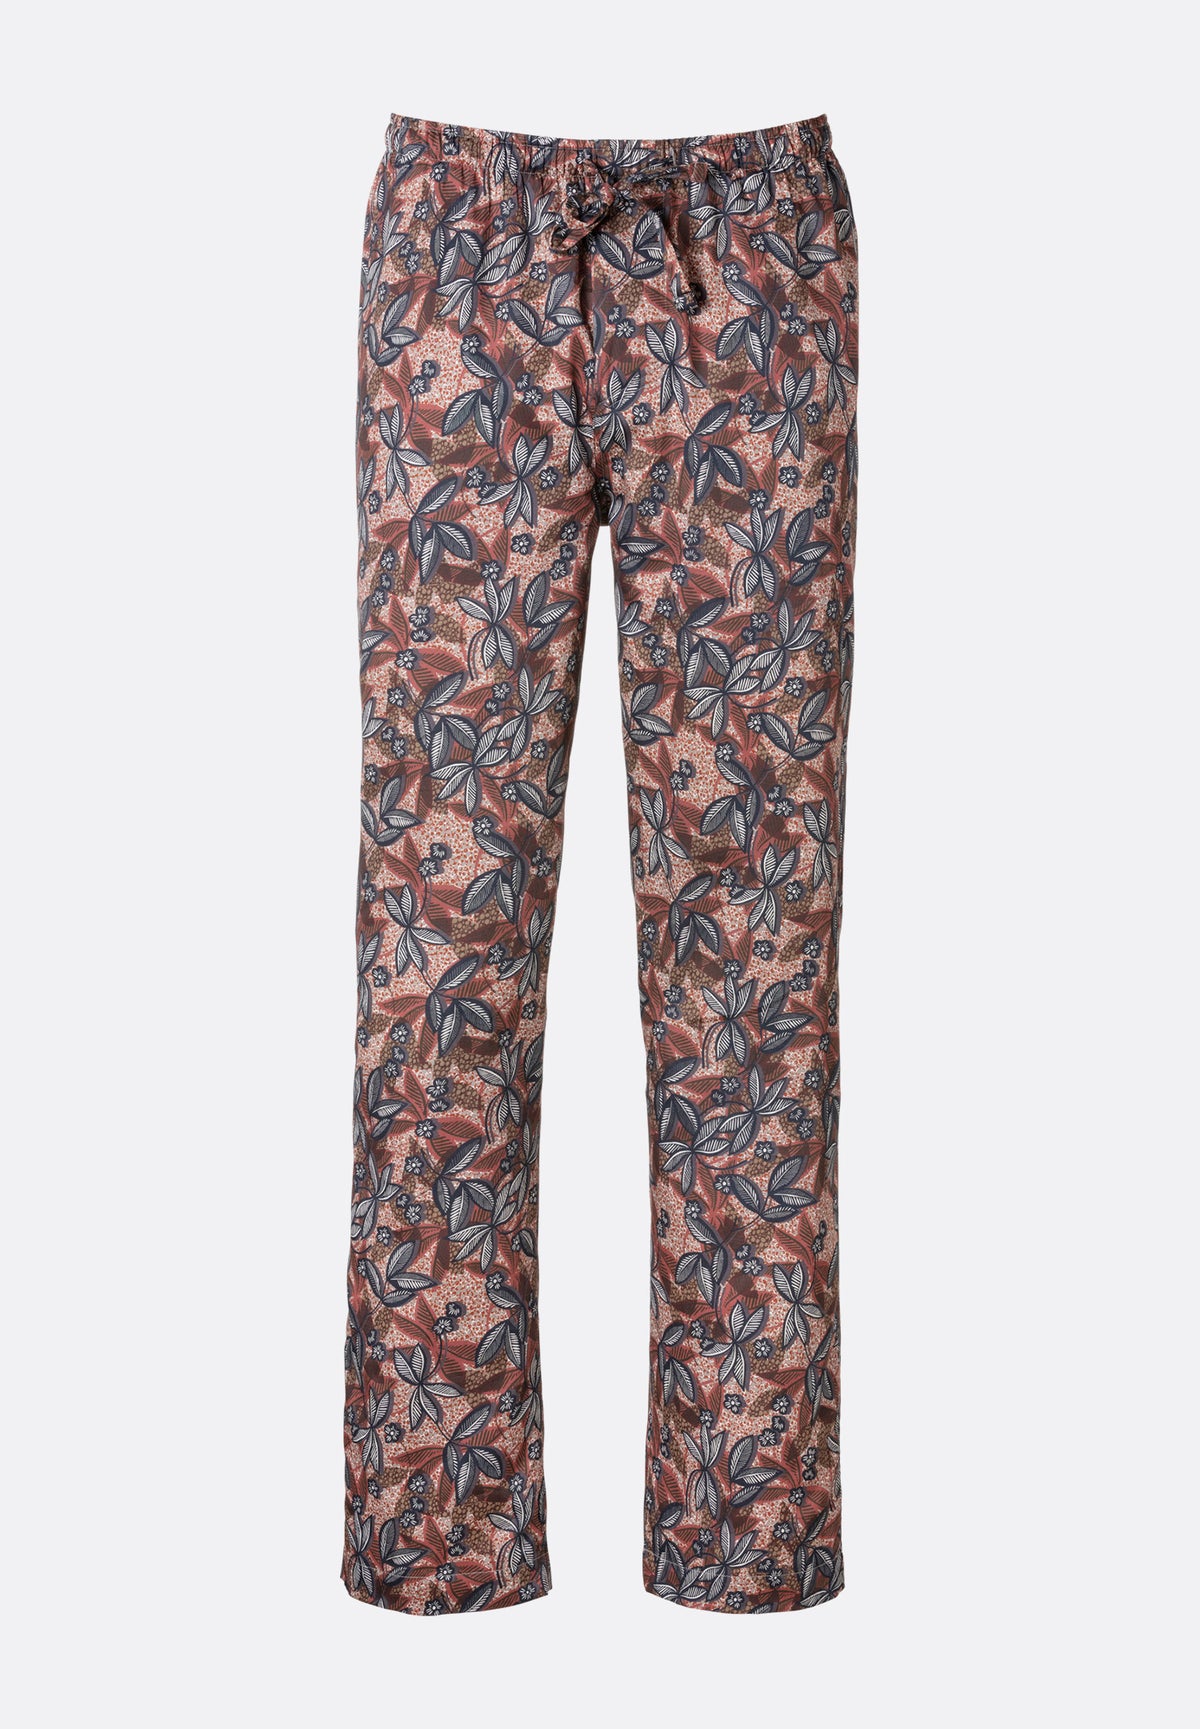 Cotton Sateen Print | Pants Long - dark grey